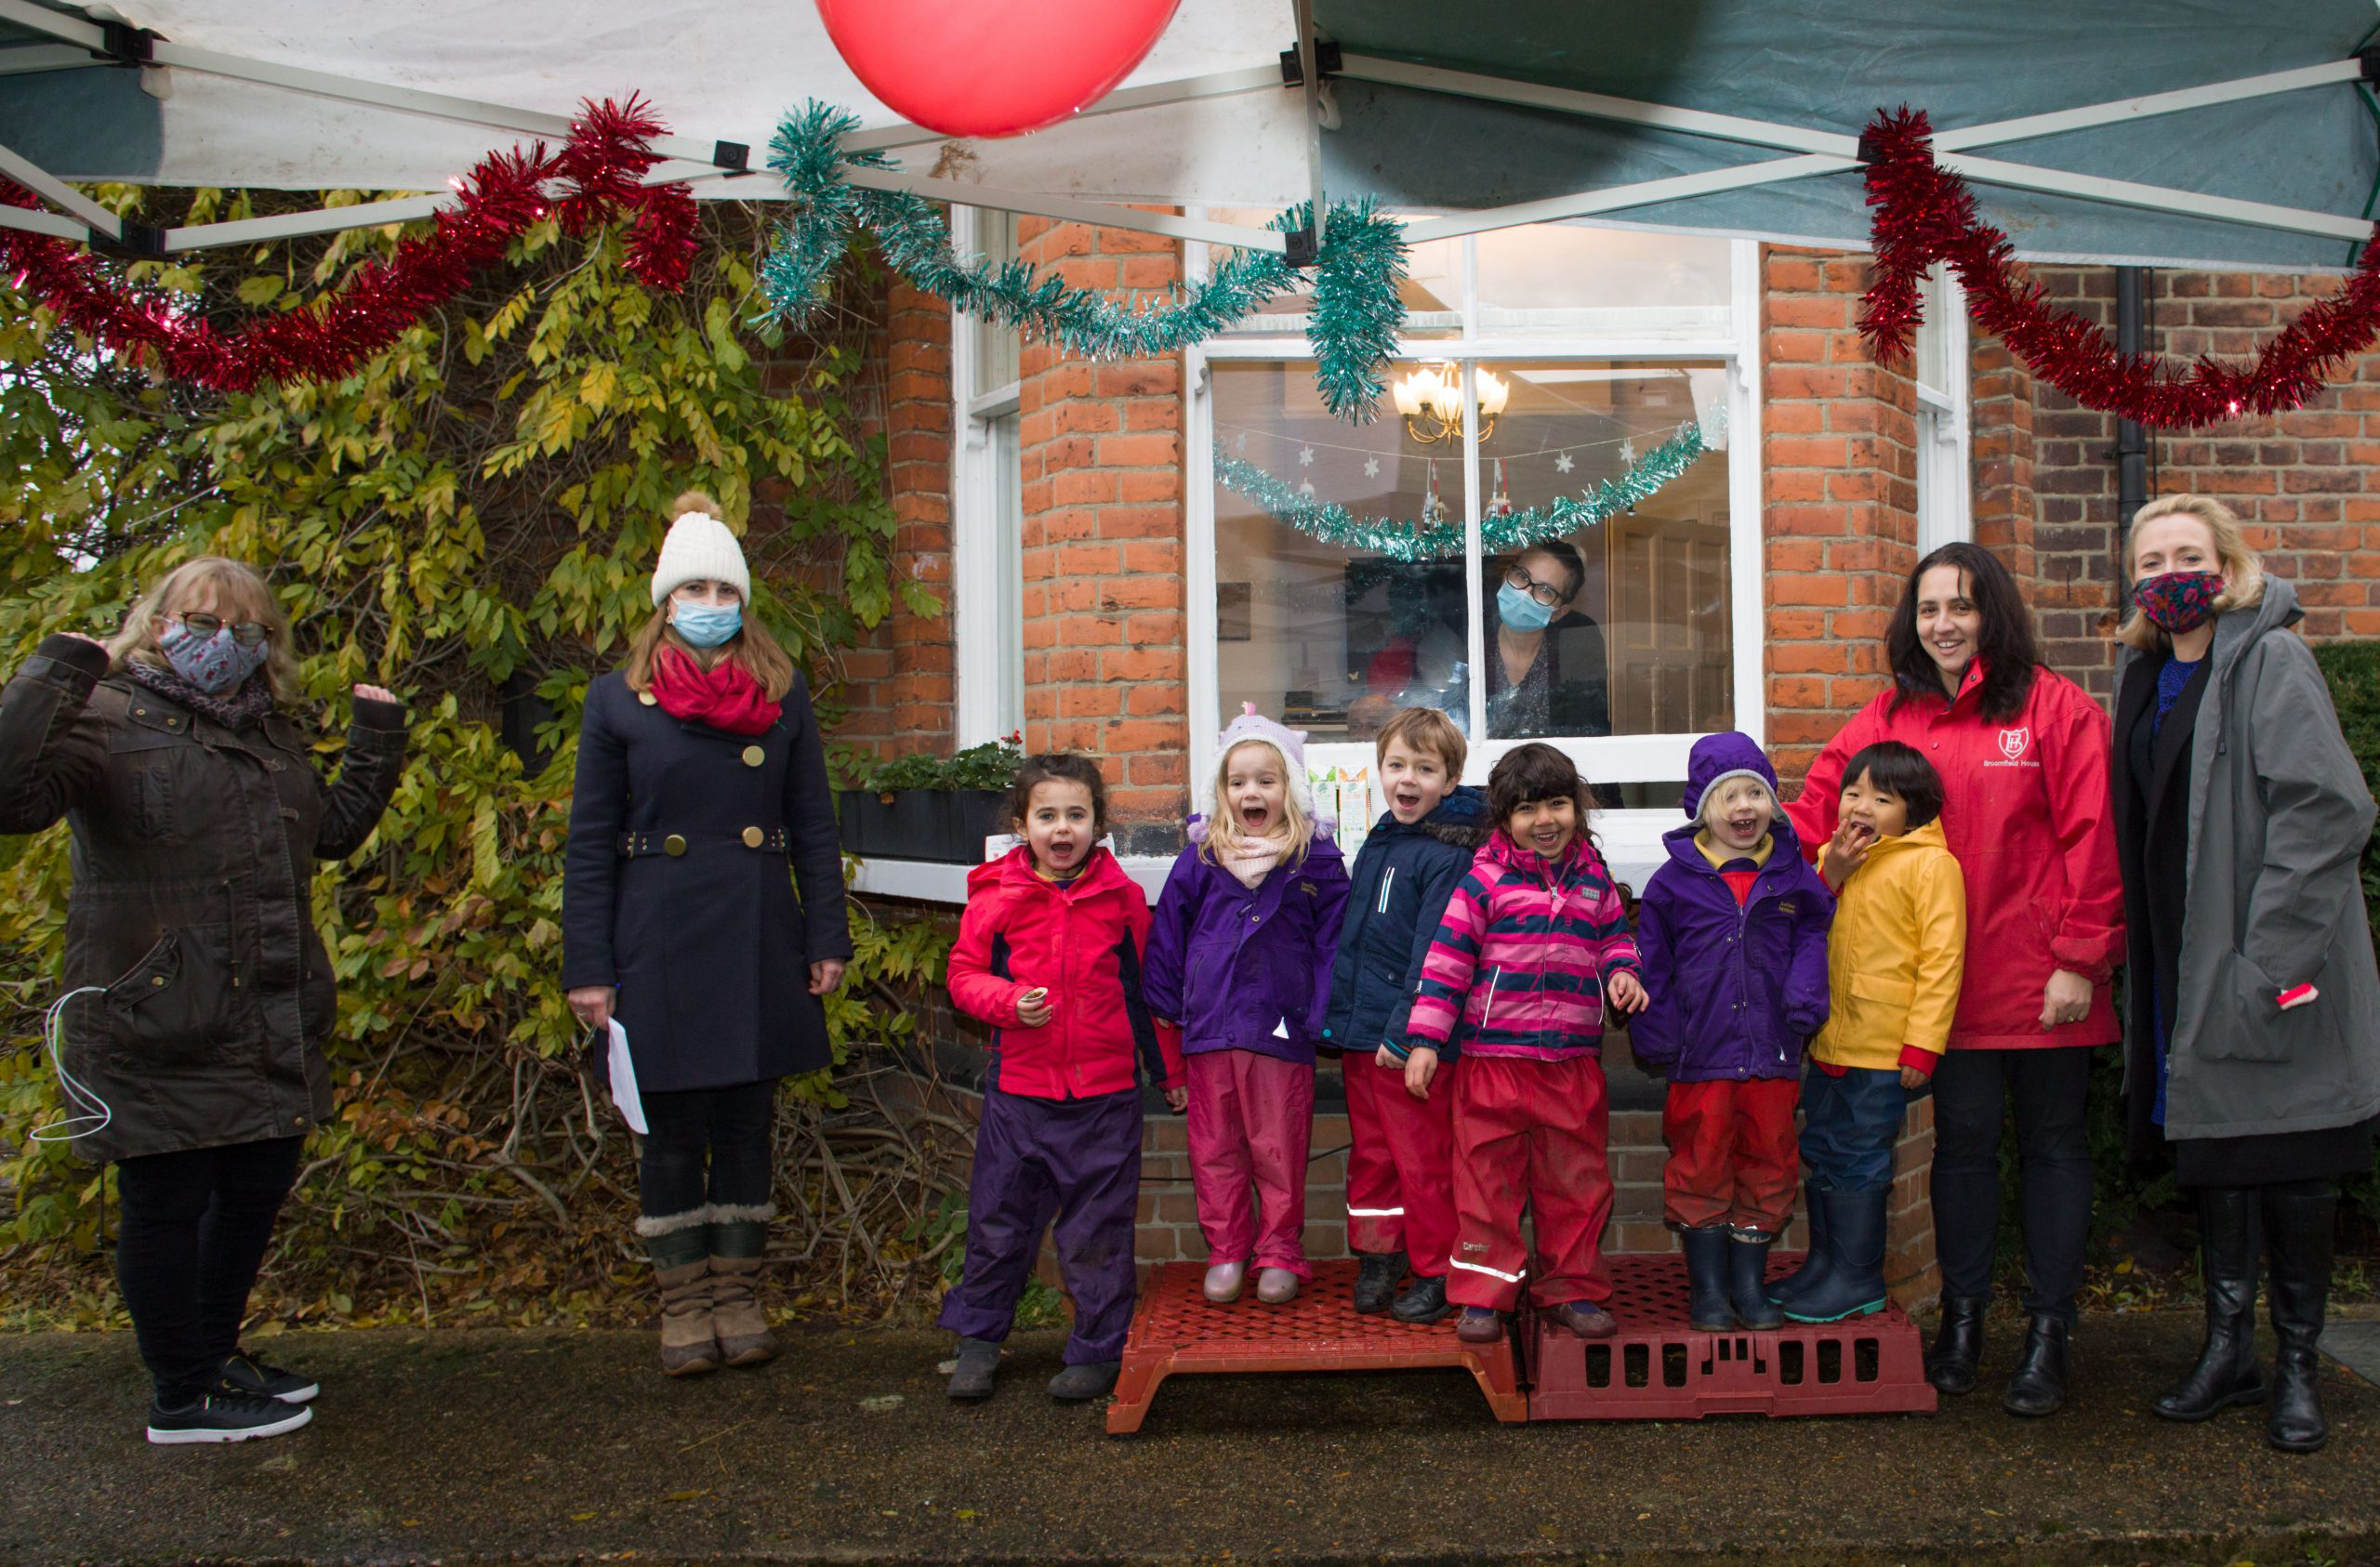 Christmas joy & festive cheer shared through care home window